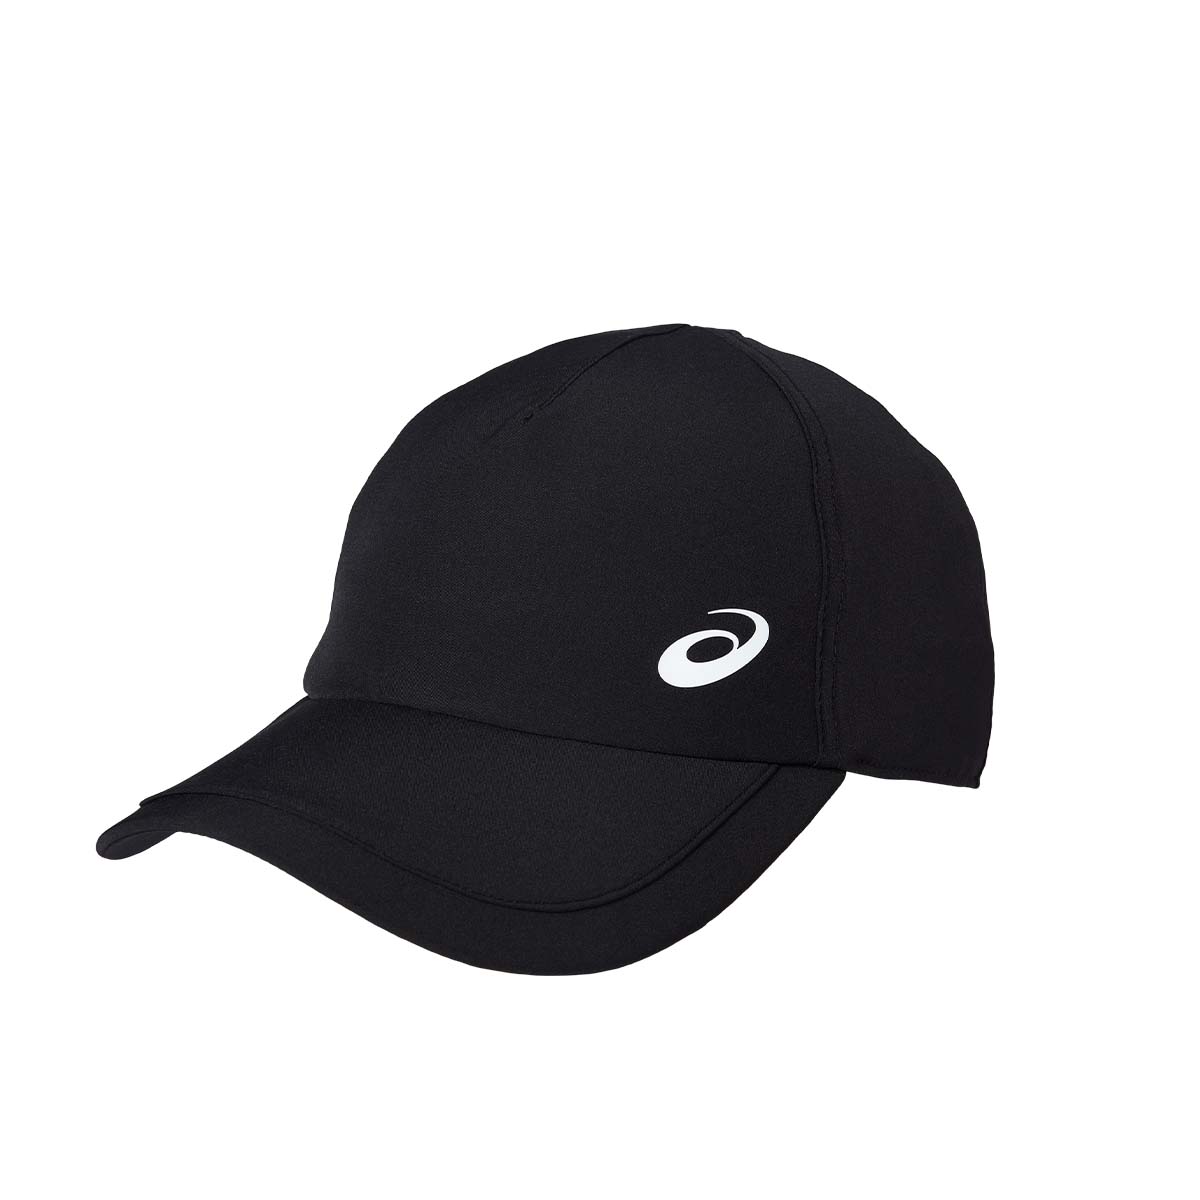 Asics PF Cap Black כובע אסיקס